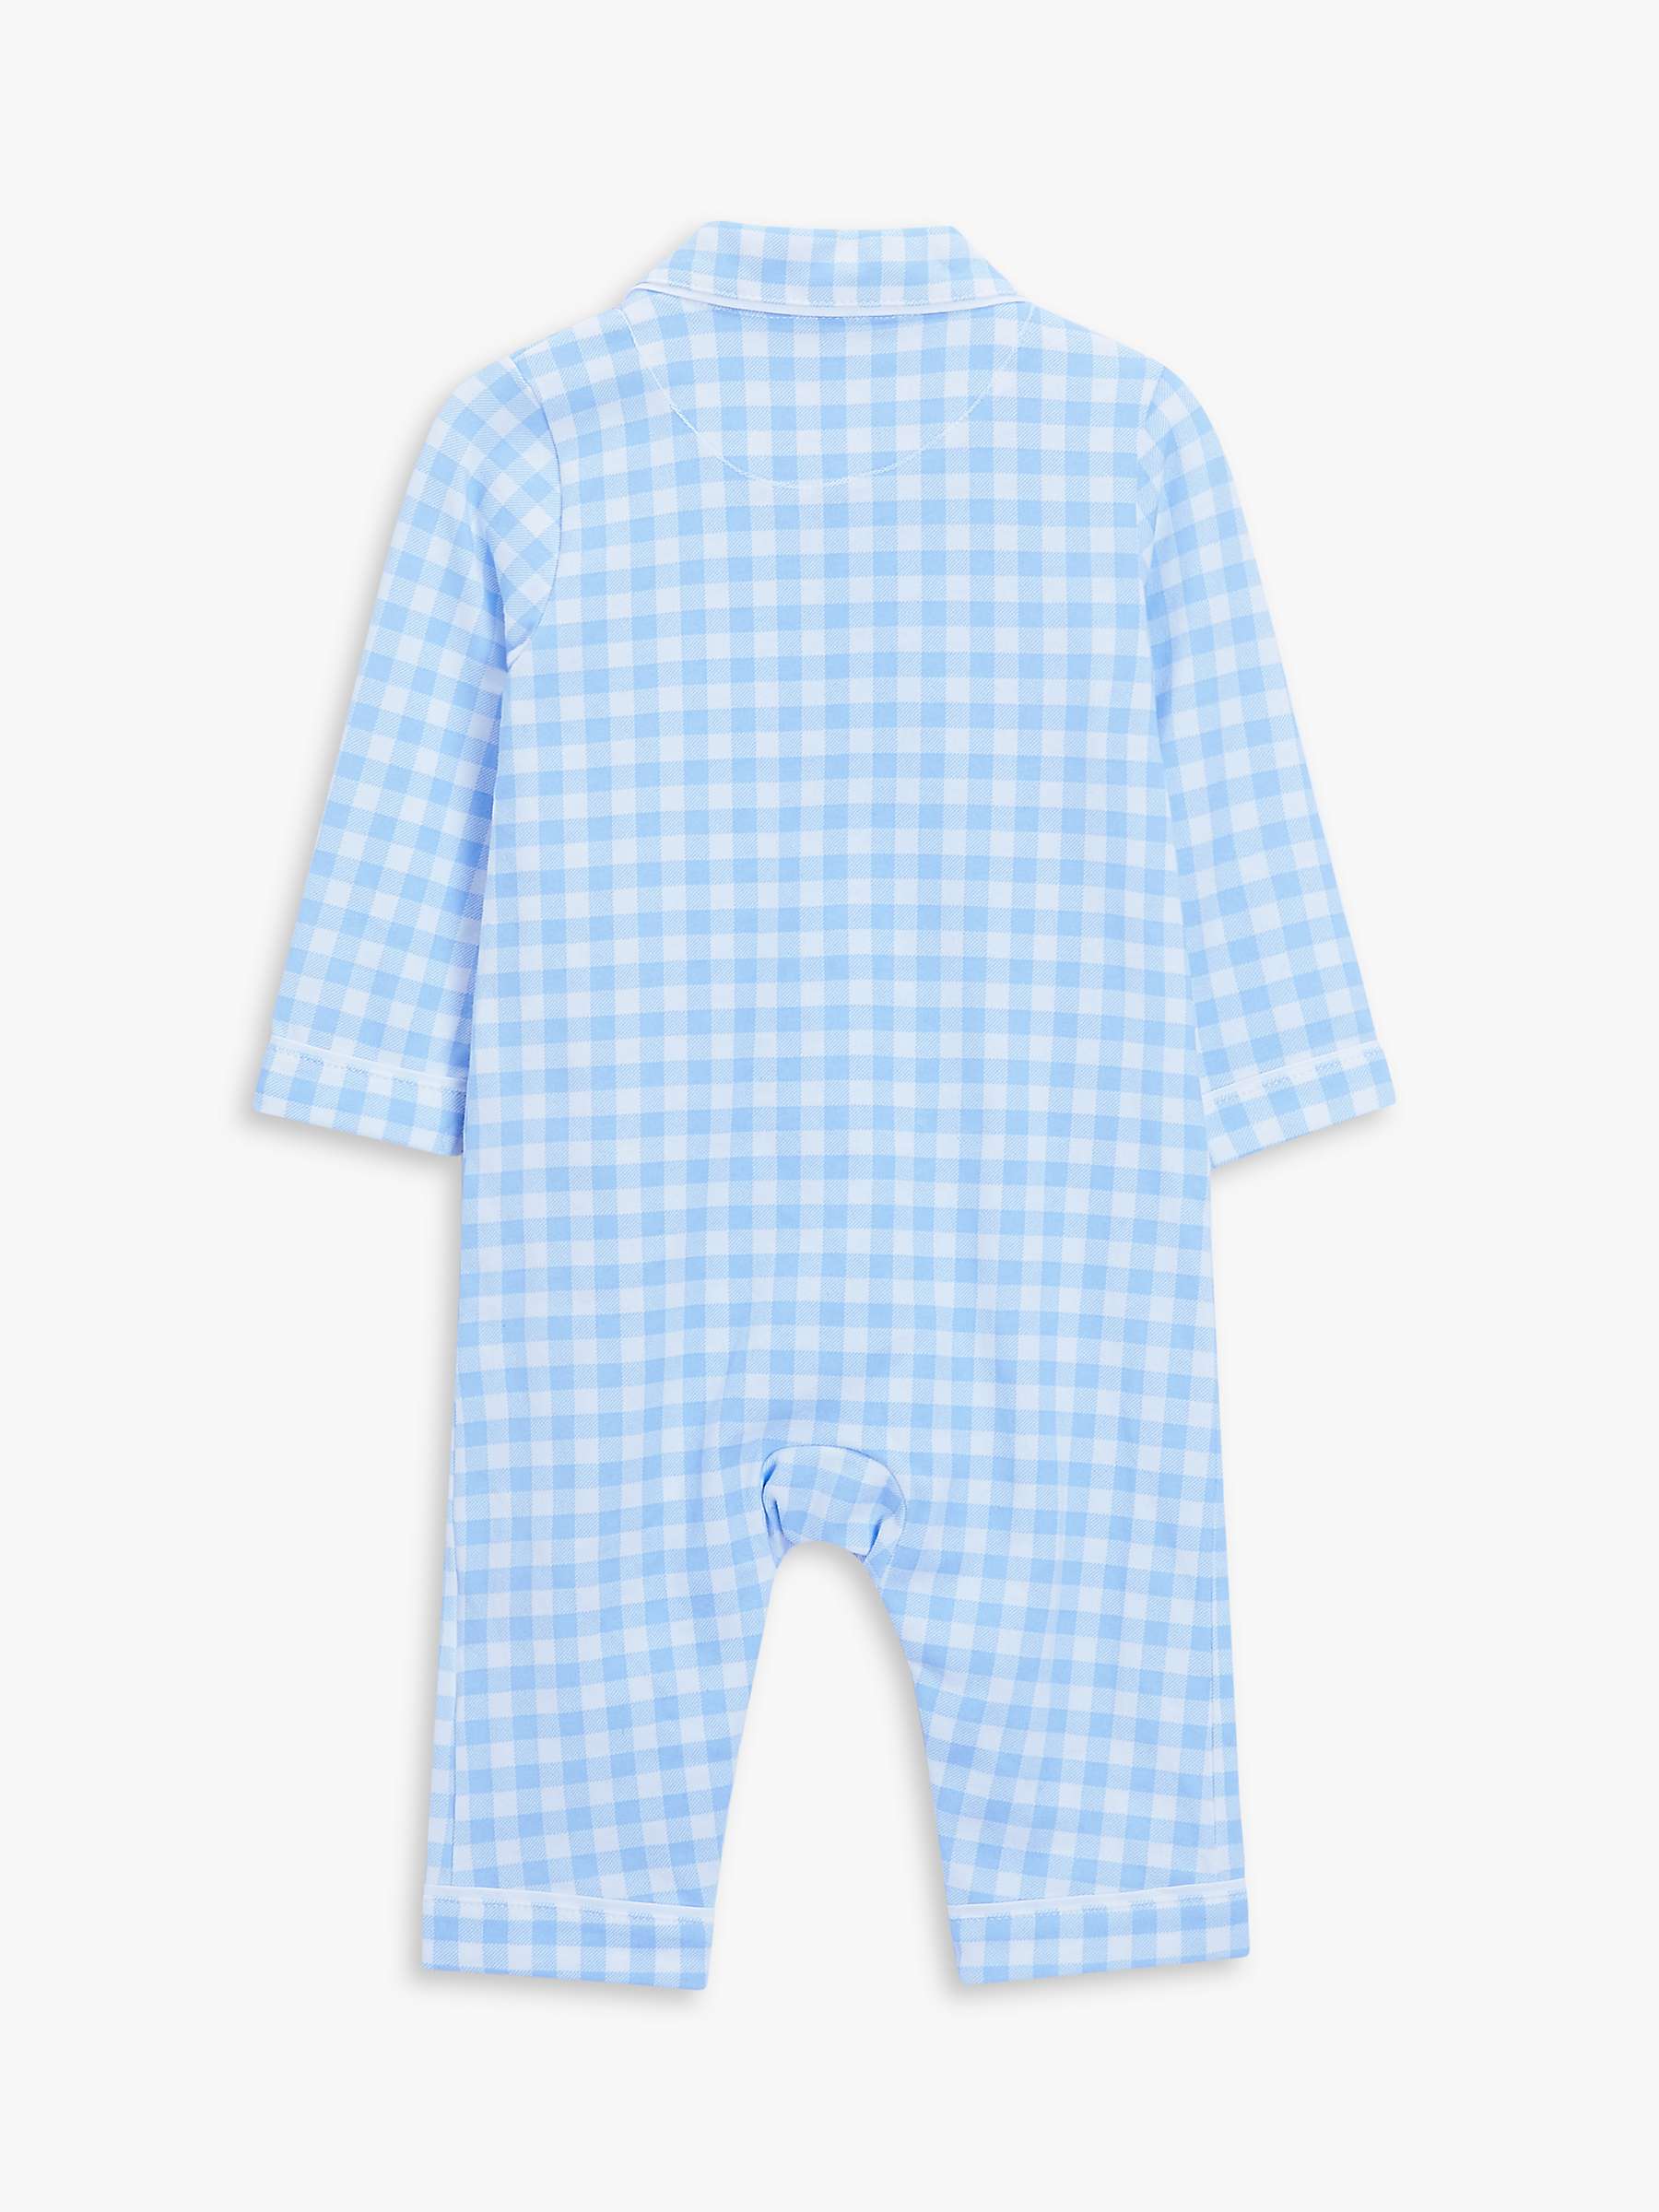 Buy John Lewis Baby Gingham Check Pyjama Romper & Teddy Bear Set Online at johnlewis.com